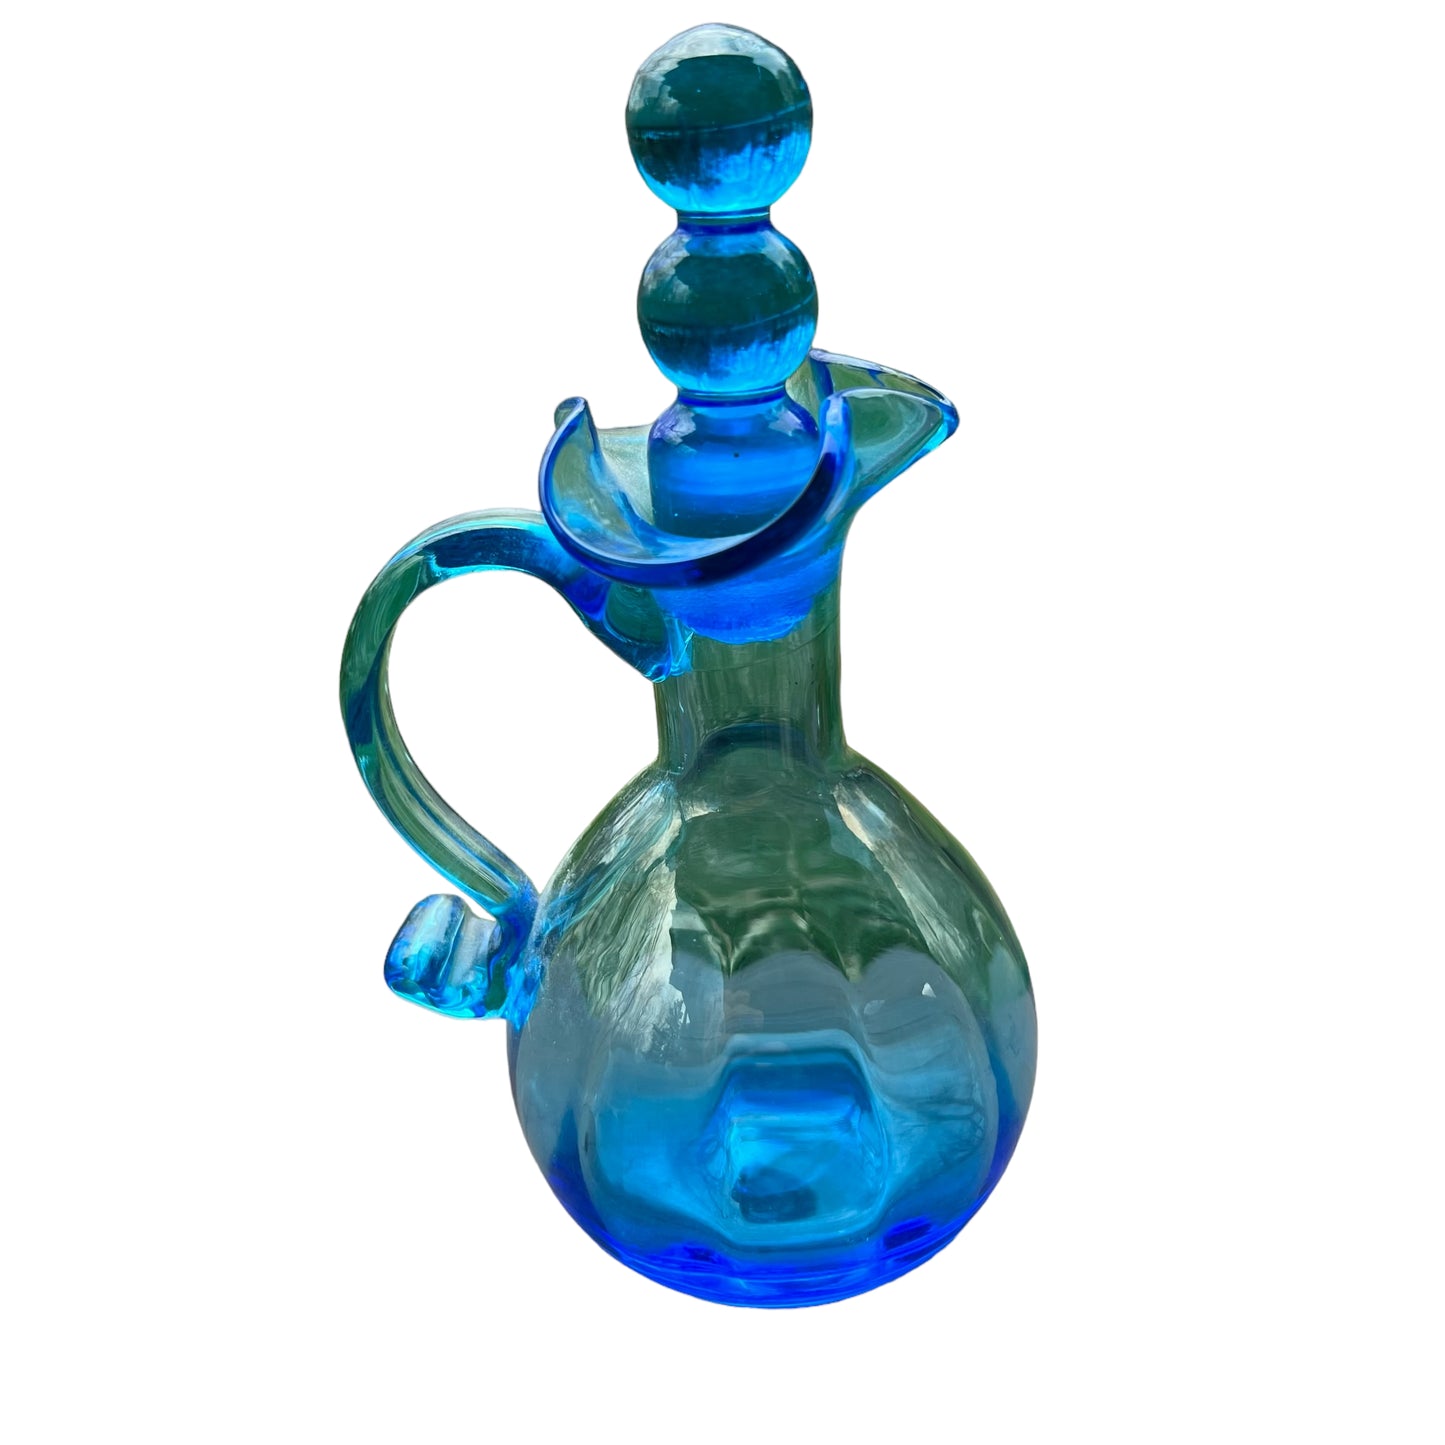 Beautiful Blue Art Glass Perfume Bottle or Cruet Stopper